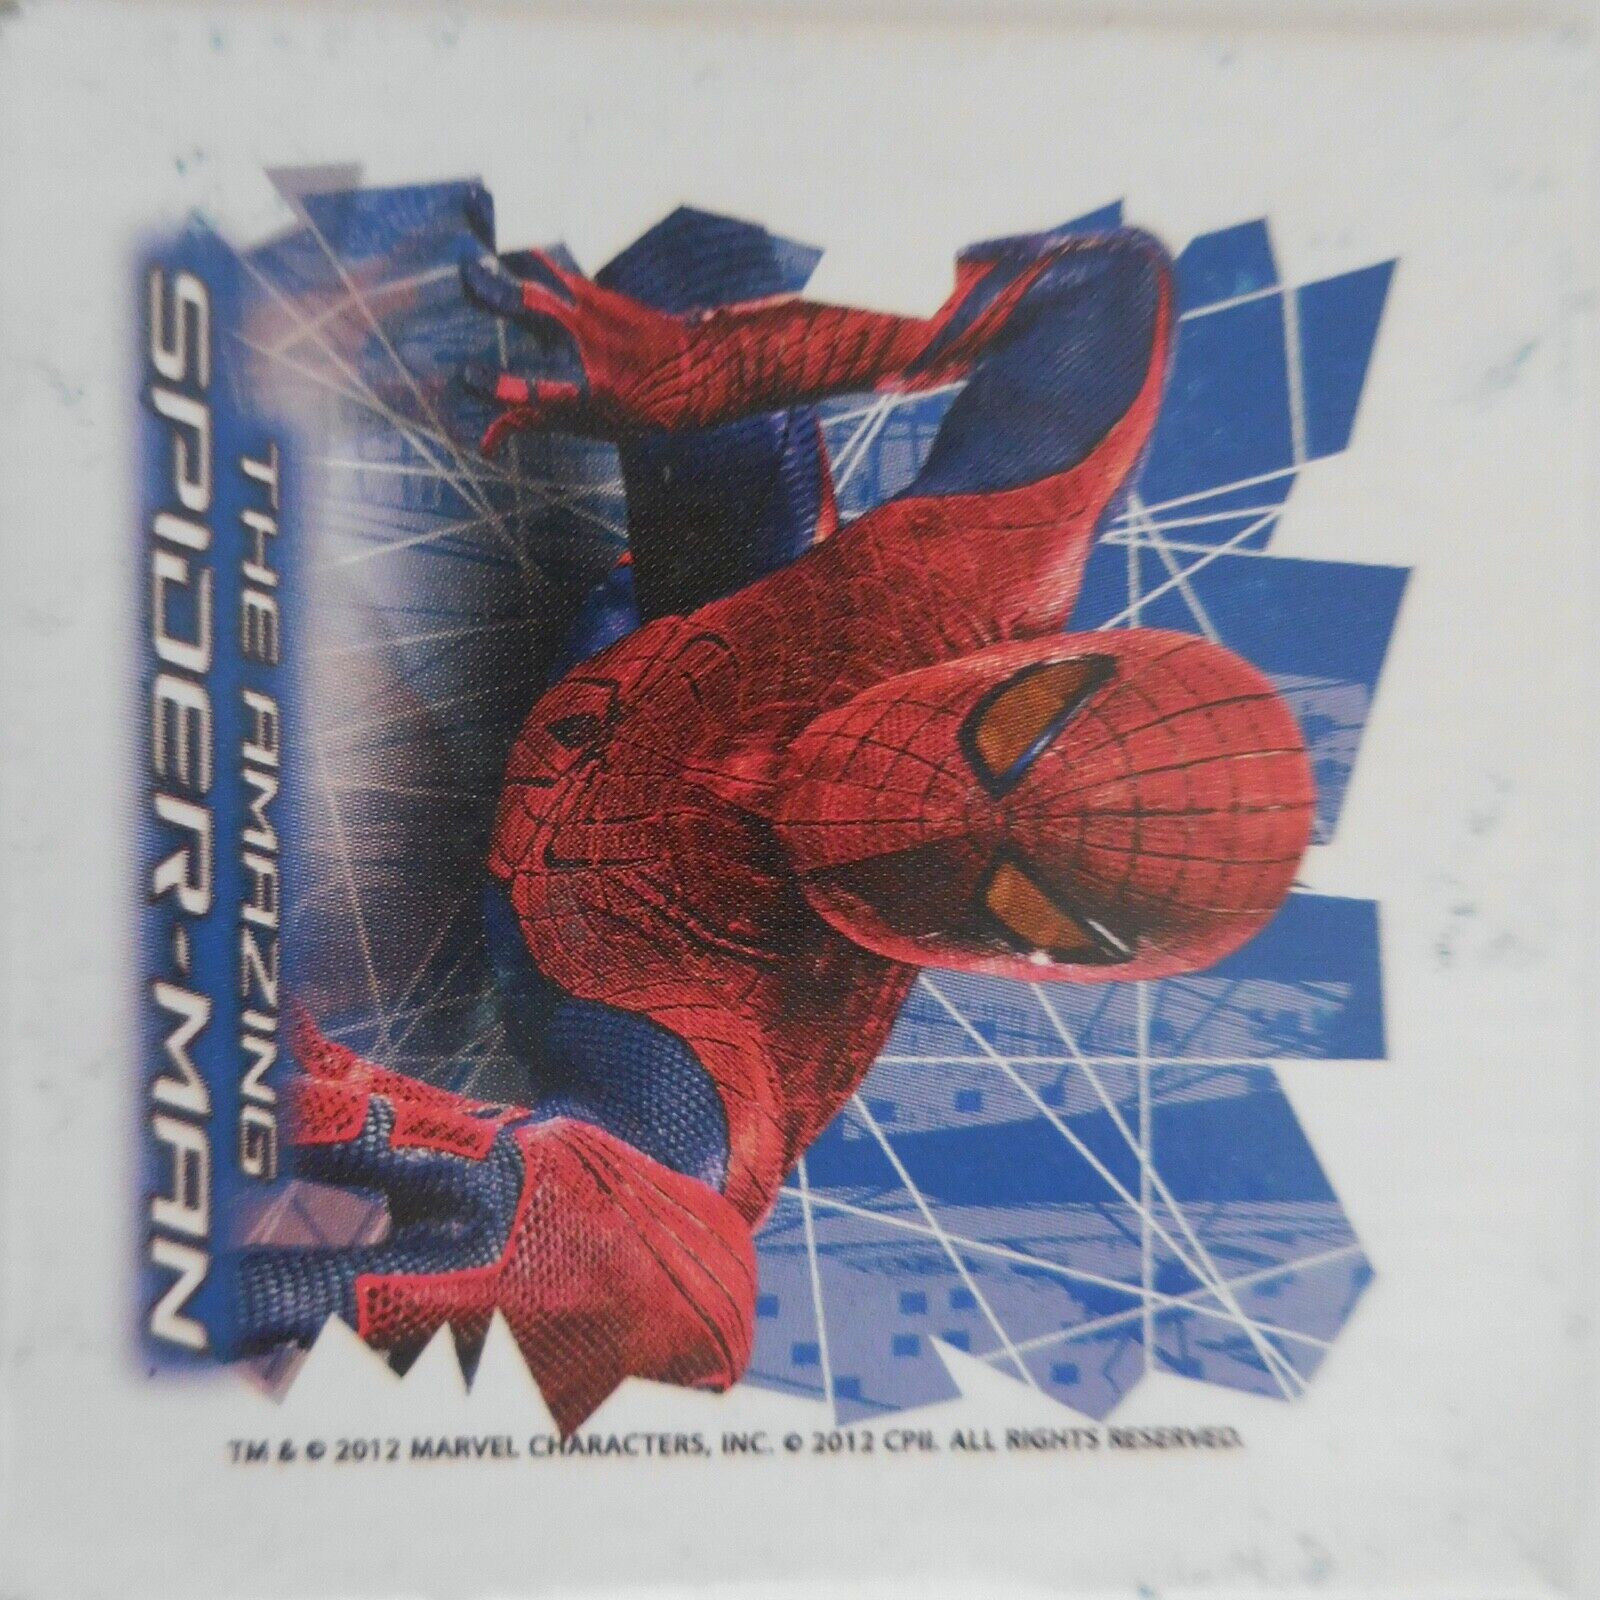 THE AMAZING SPIDERMAN 2012 MARVEL CHARACTERS CLEMENTONI carte puzzle N5992 Ograniczona ilość, okazja